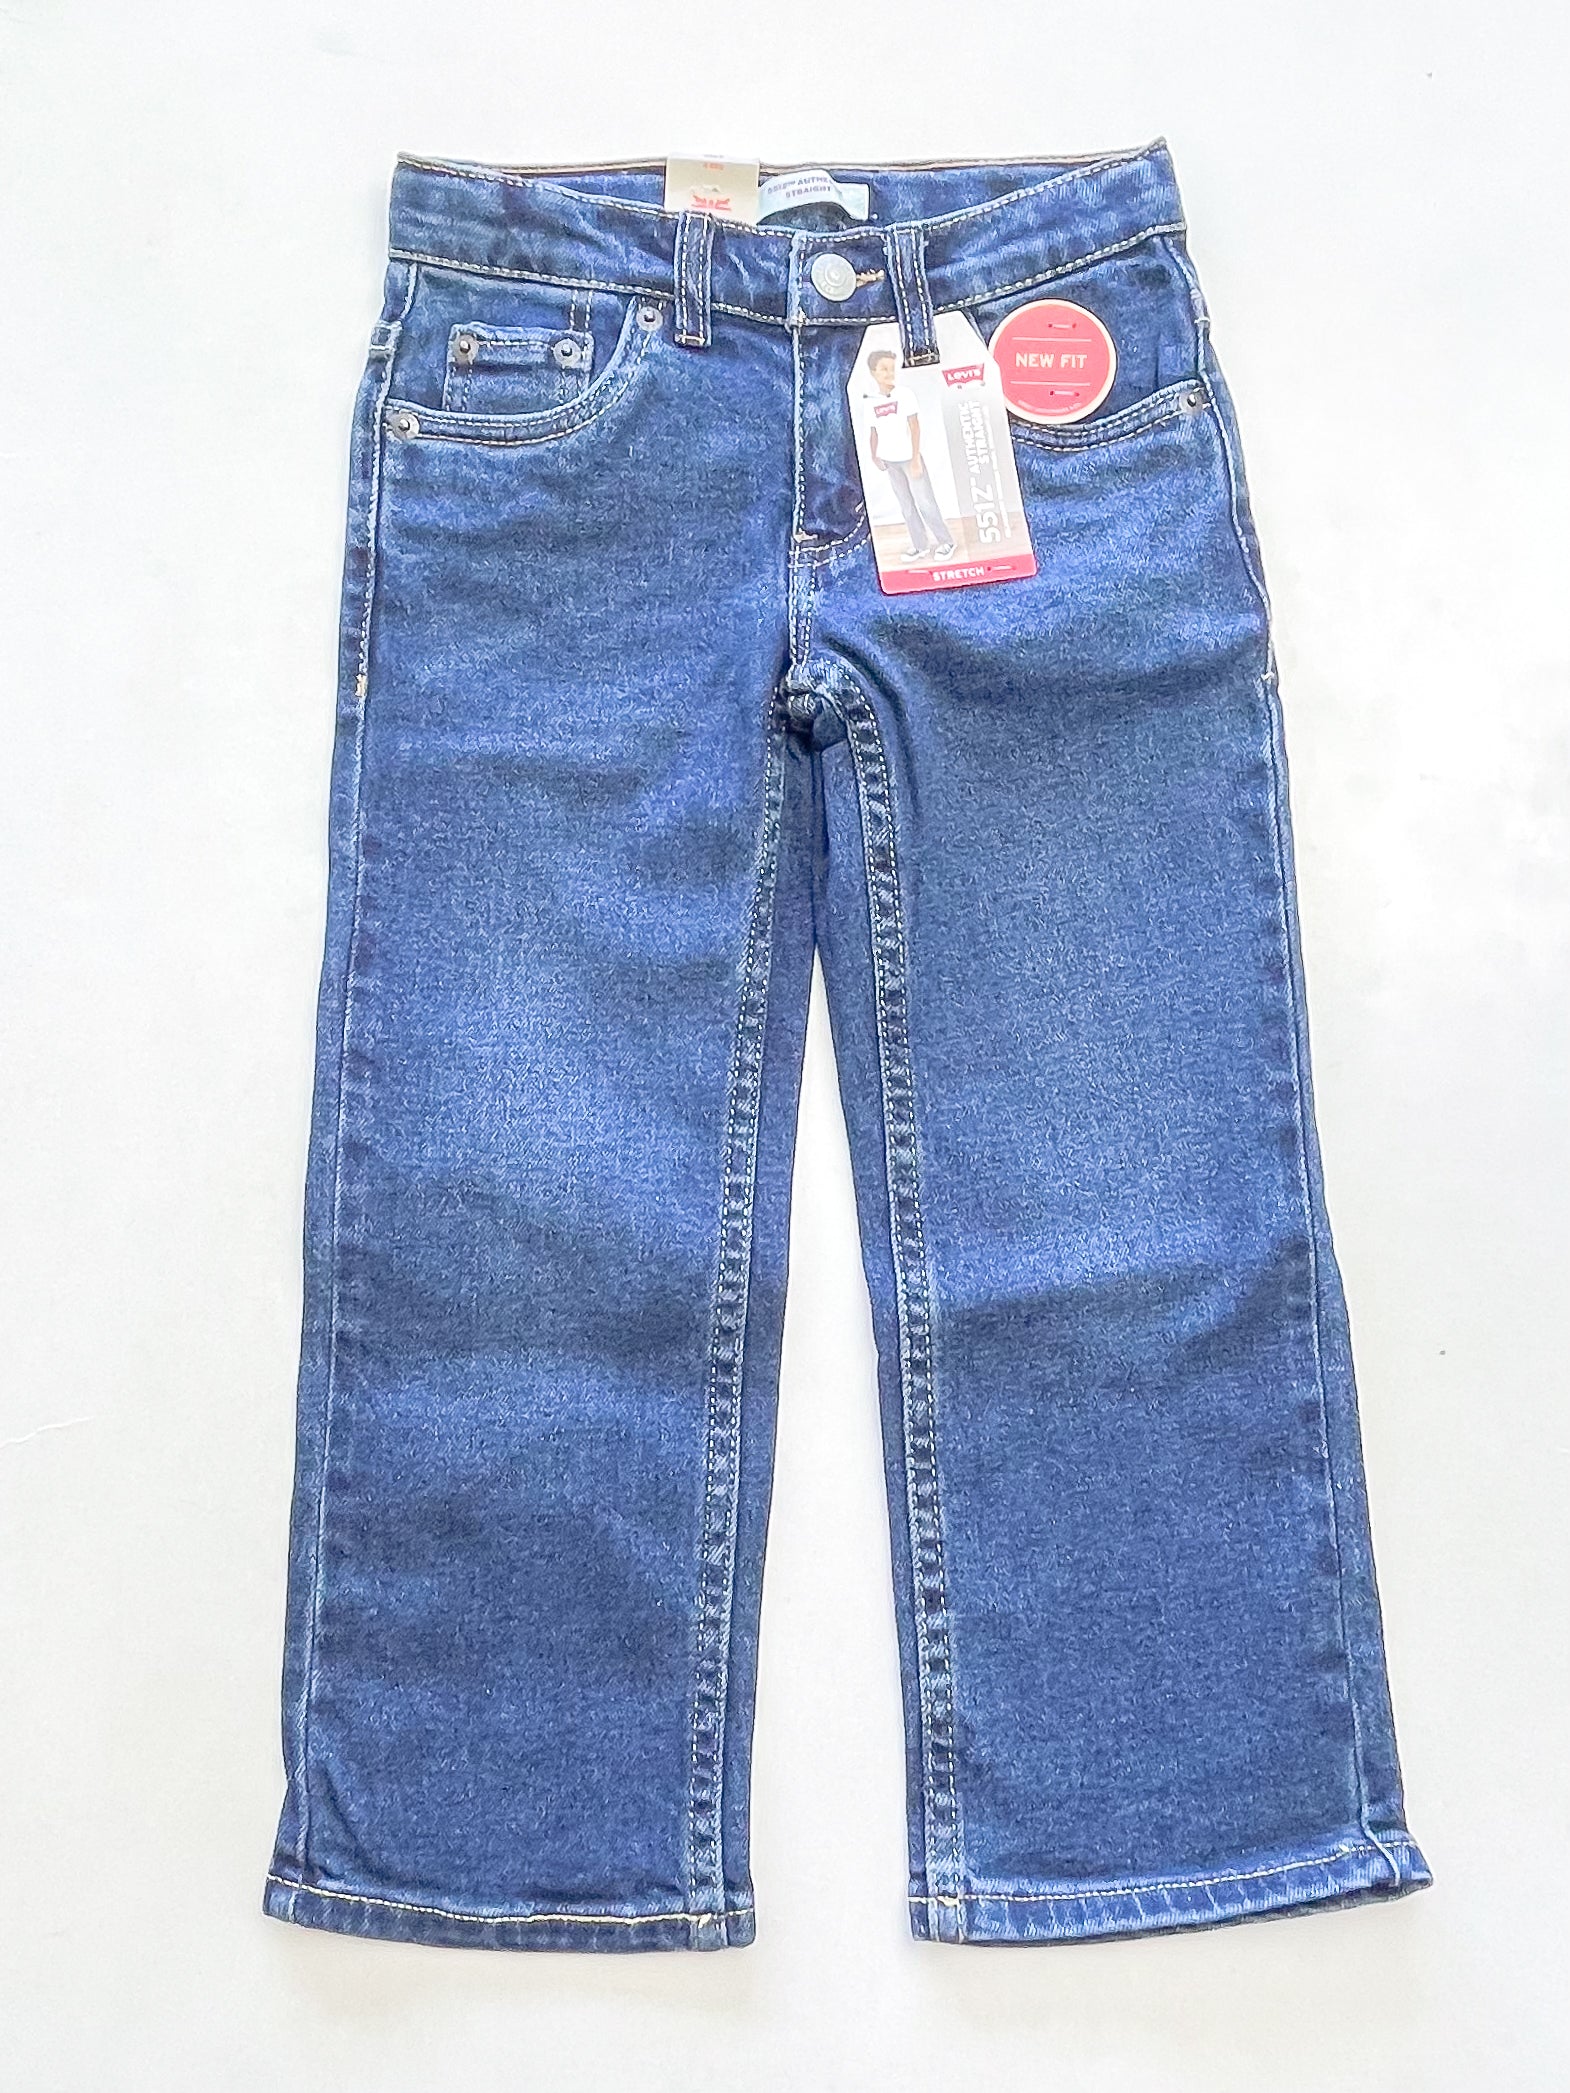 BNWT Levi's 551Z relaxed denim jeans (4y)